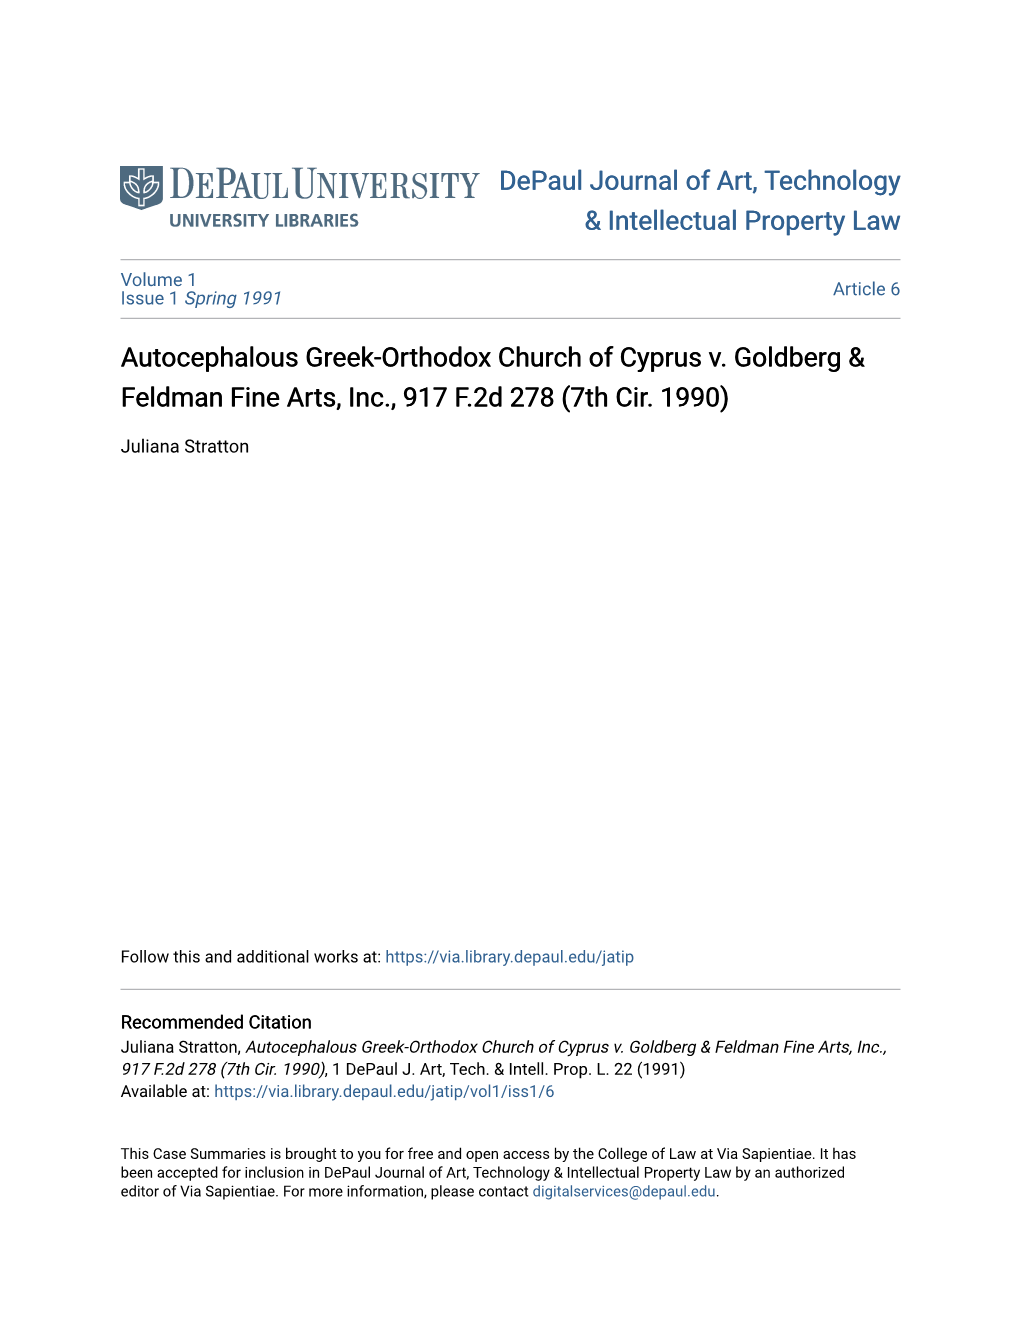 Autocephalous Greek-Orthodox Church of Cyprus V